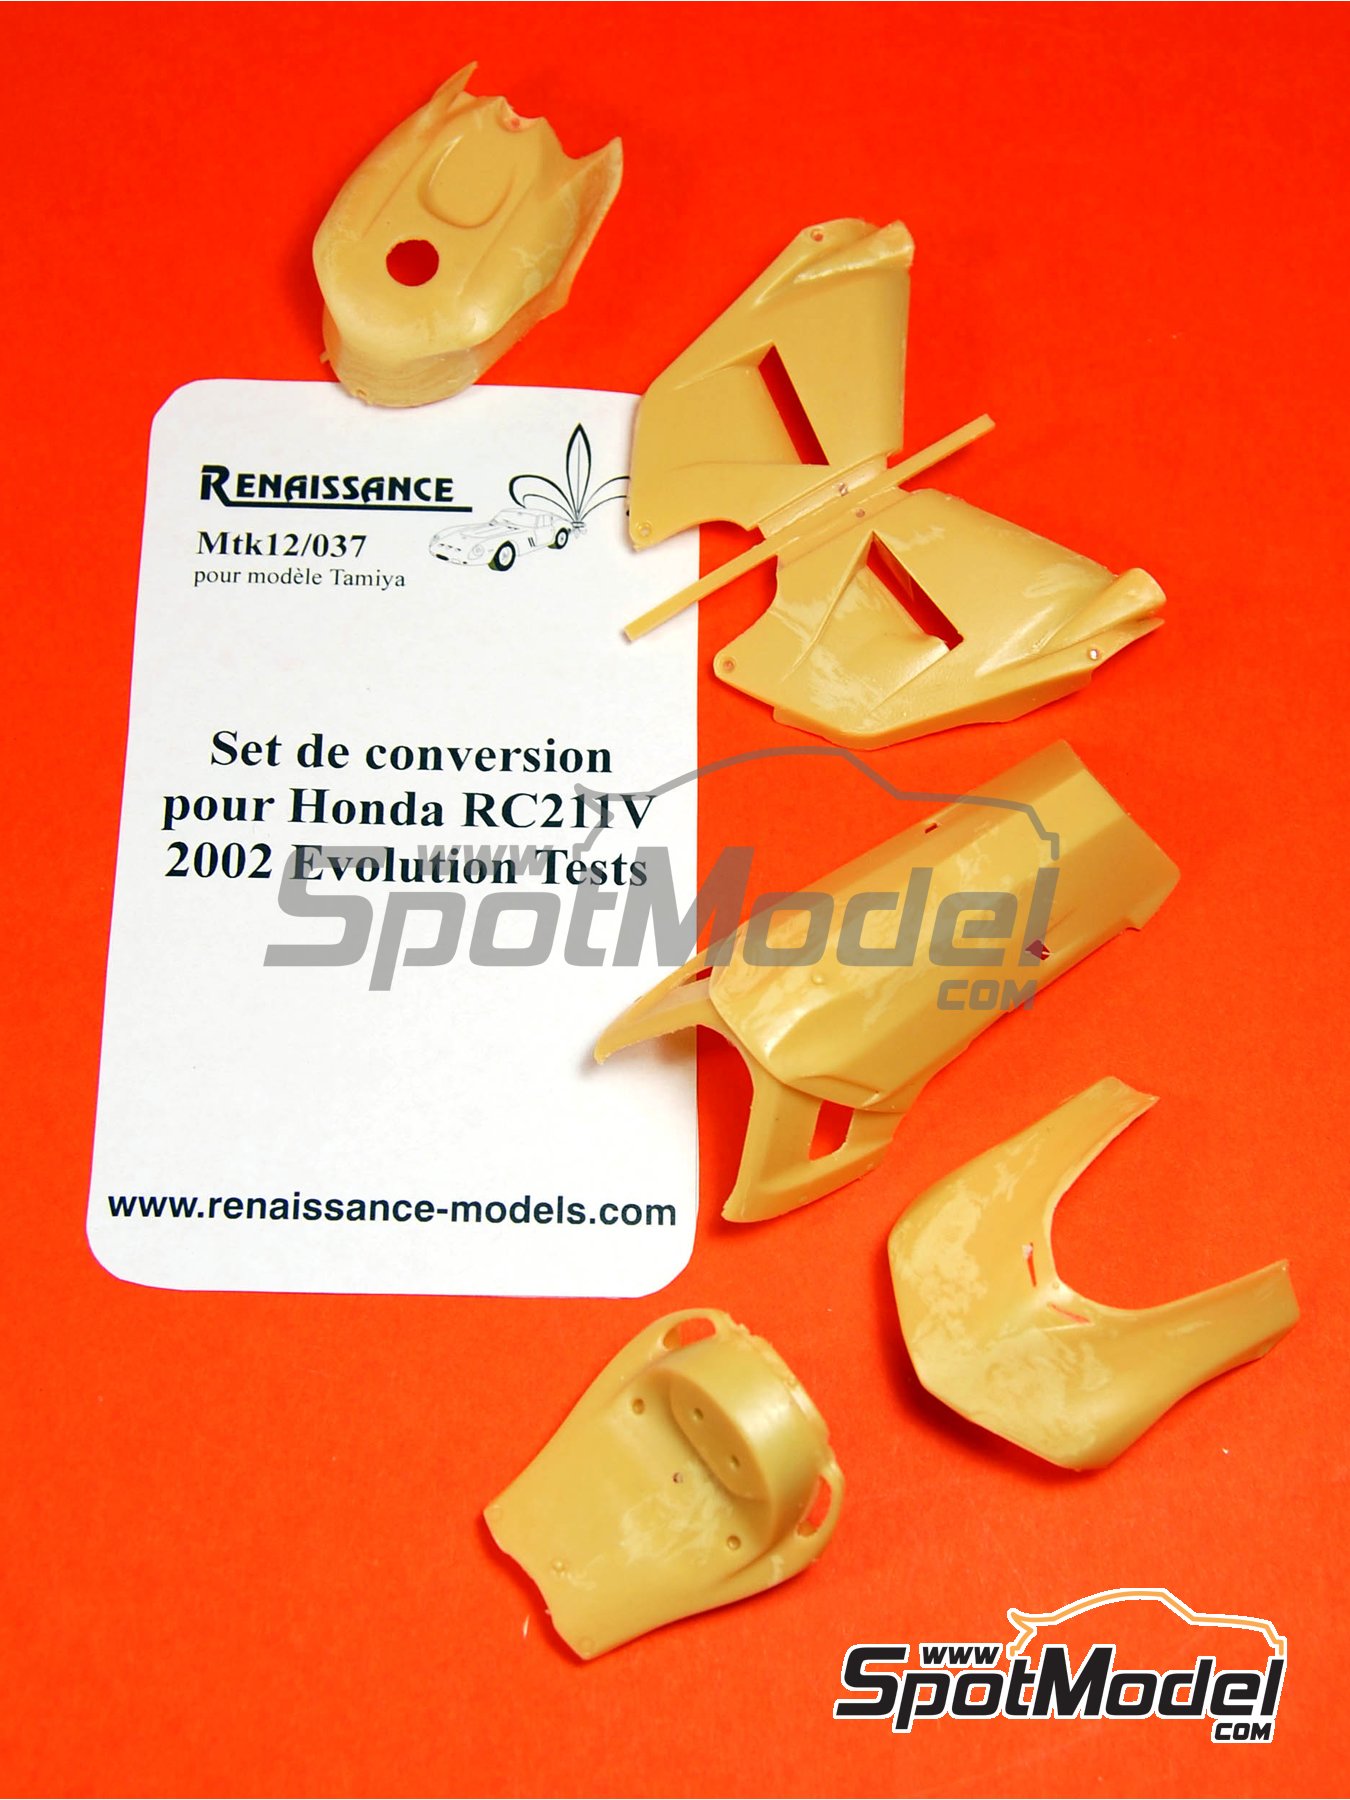 Renaissance Models MTK12/037: Transkit 1/12 scale - Honda RC211V